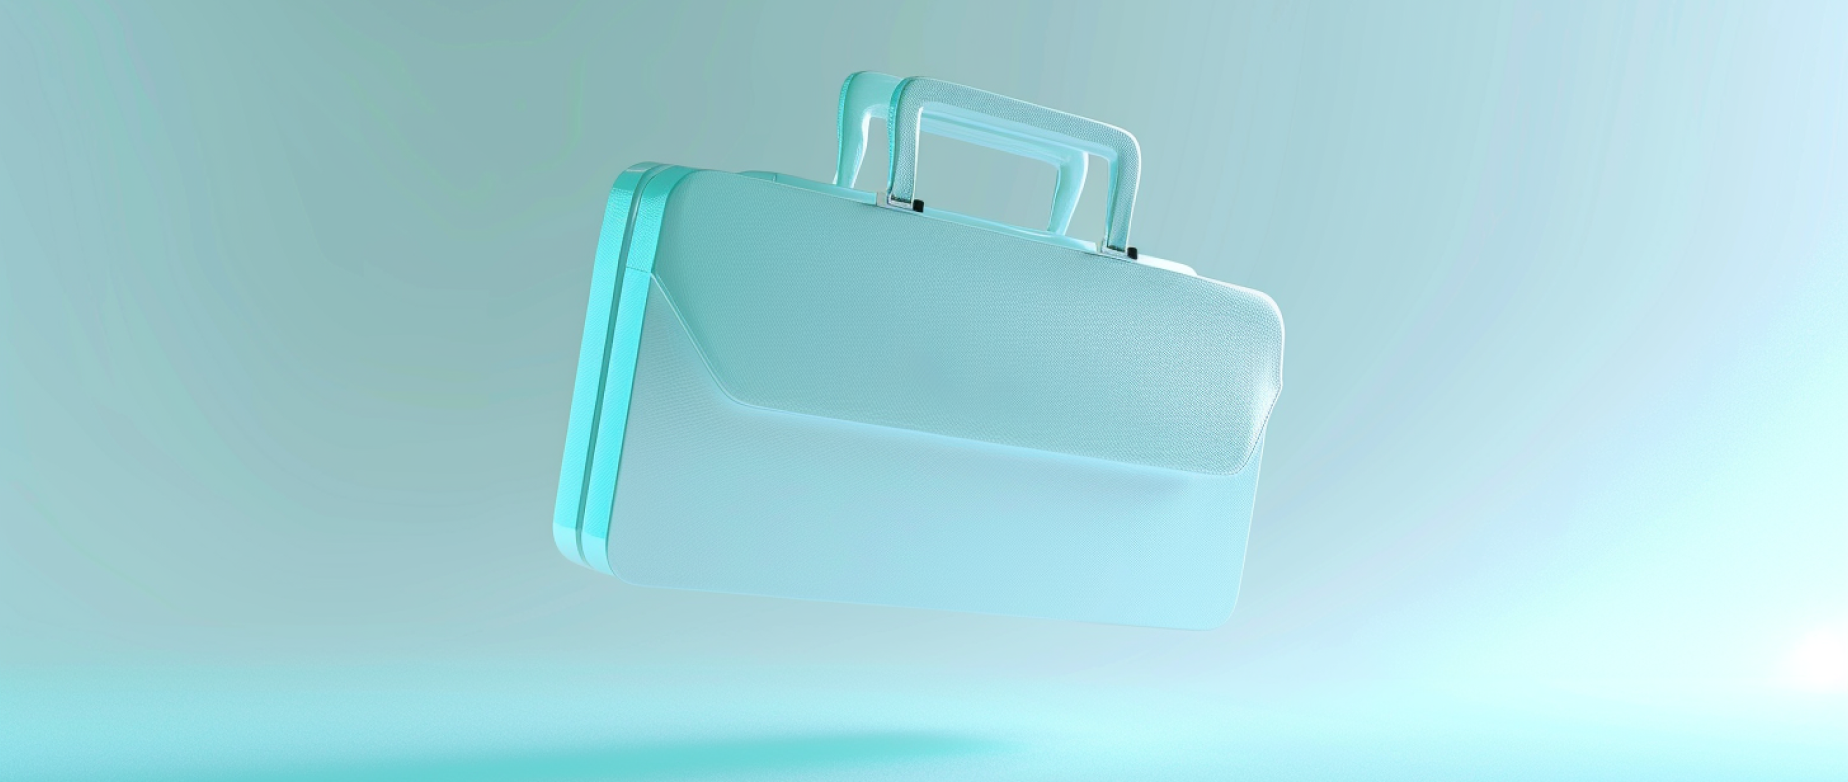 An almost transparent light blue briefcase on a light blue background.